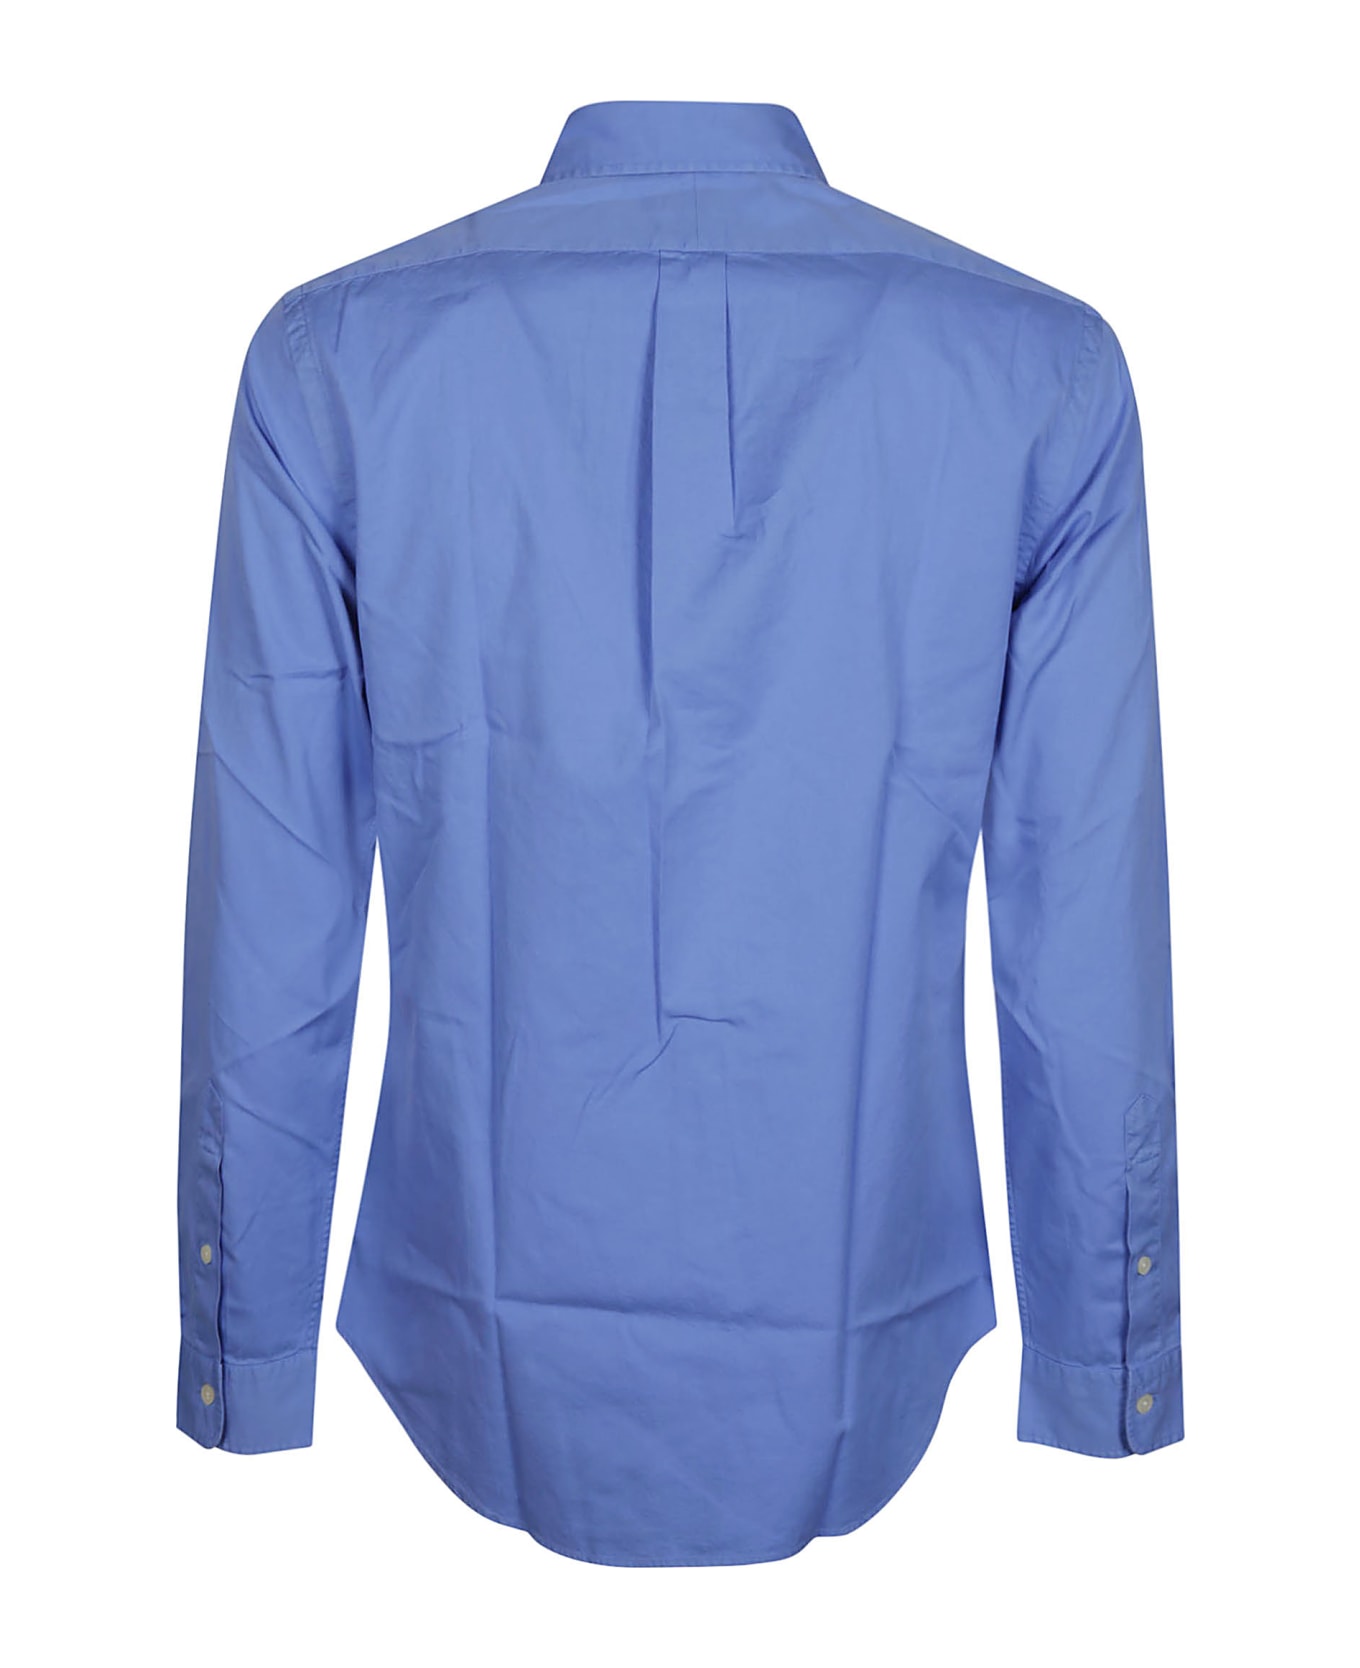 Polo Ralph Lauren Long Sleeve Sport Shirt - Harbor Island Blue シャツ